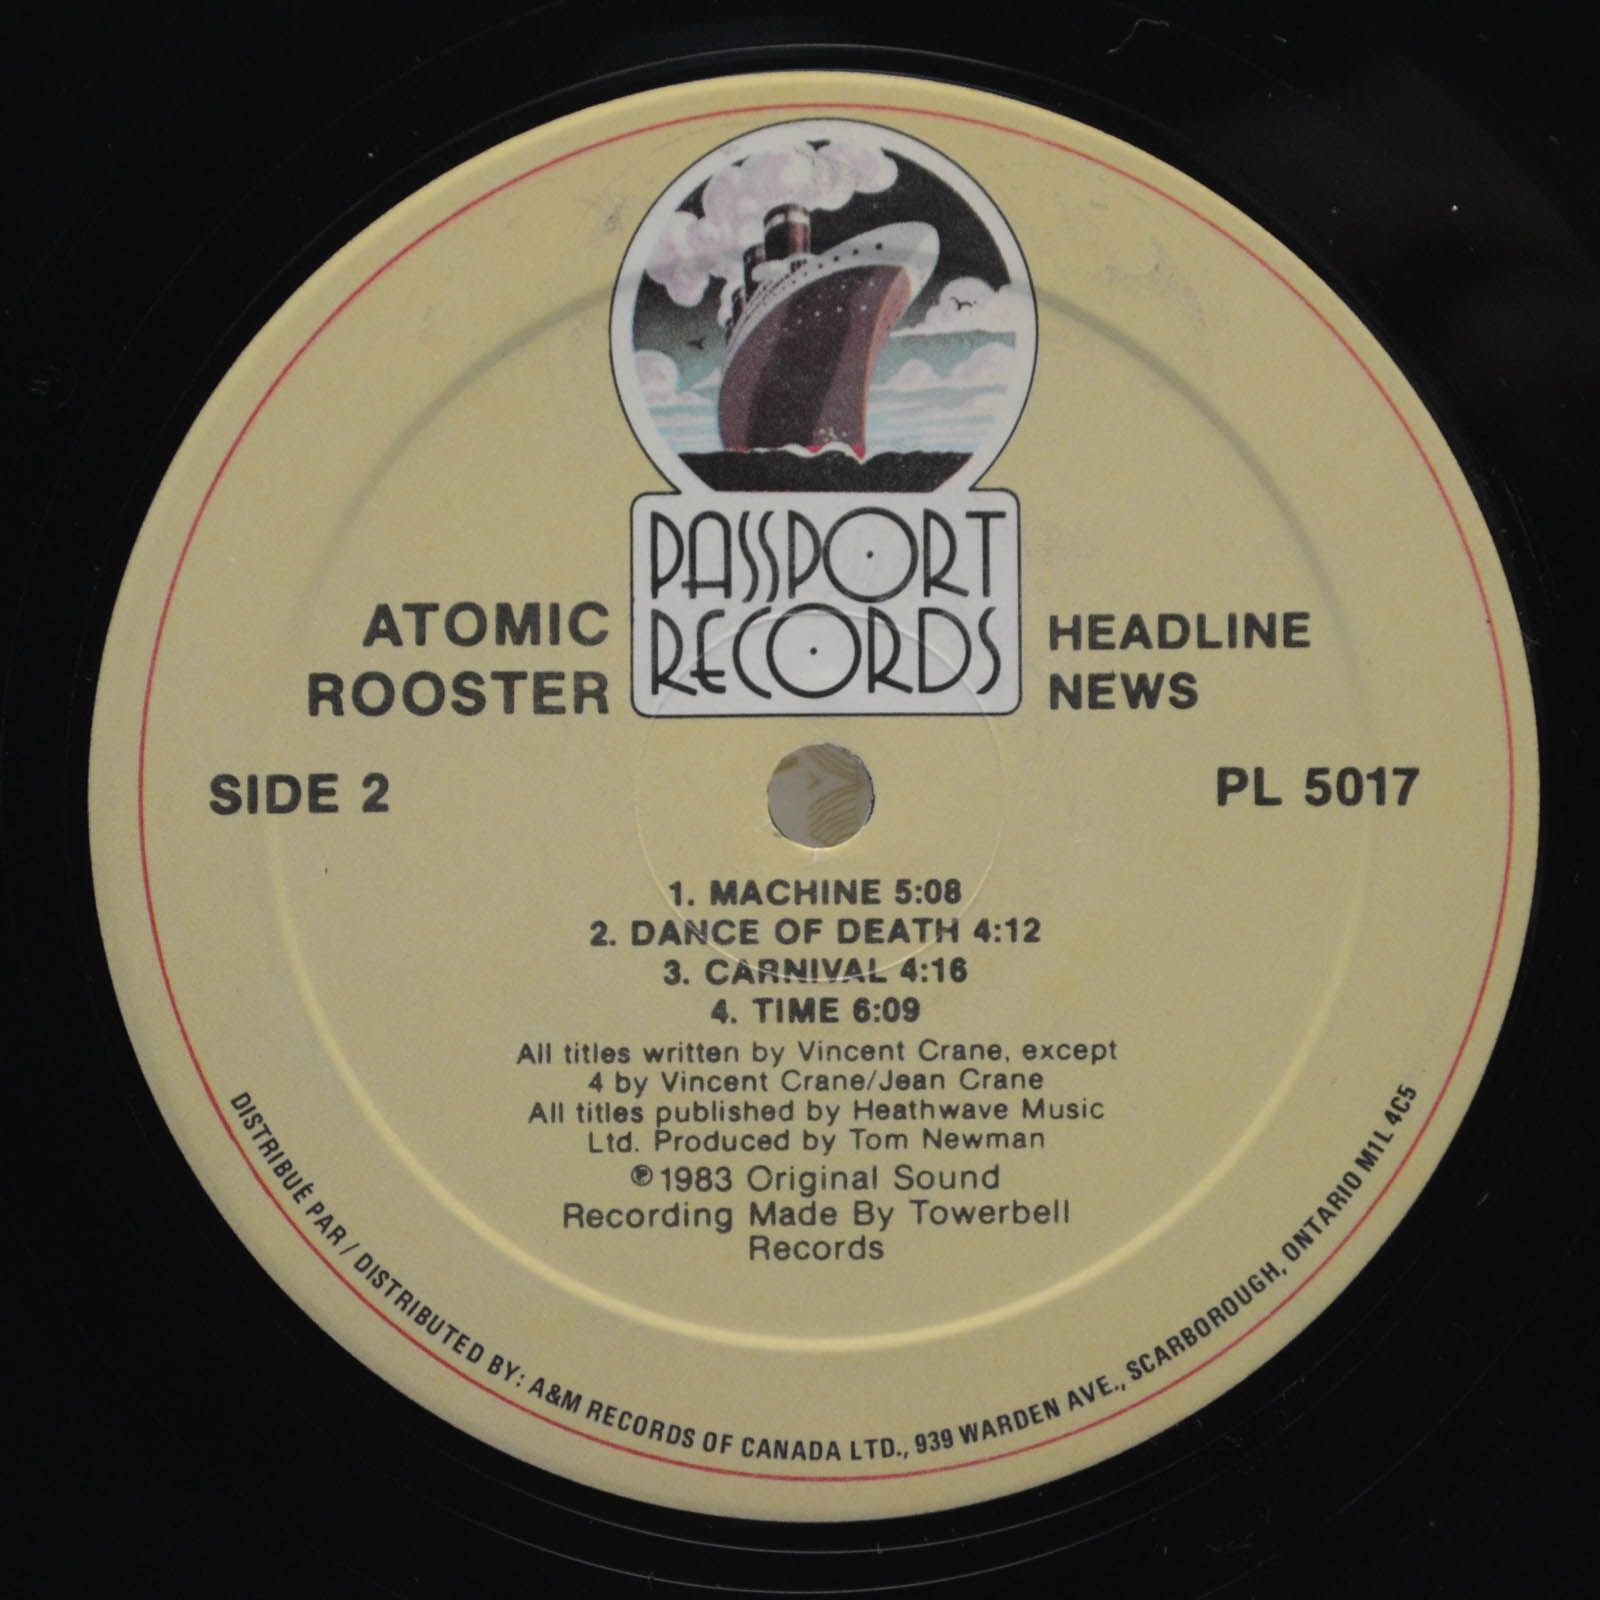 Atomic Rooster — Headline News, 1983